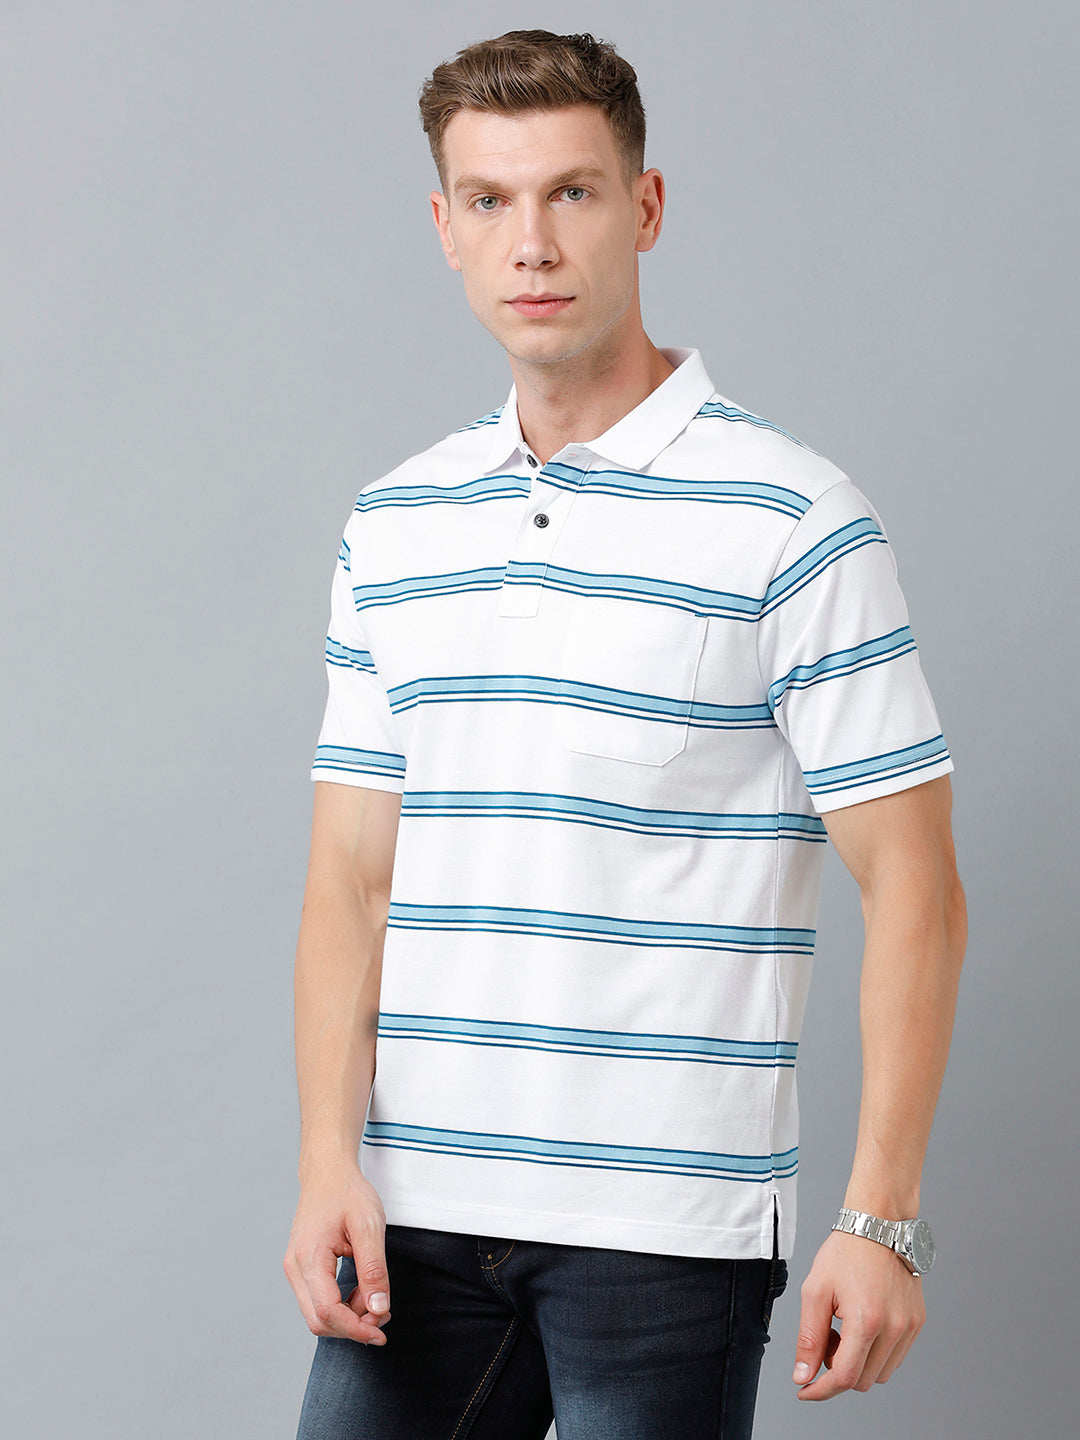 Classic Polo Men's Cotton Blend Half Sleeve Striped Authentic Fit Polo Neck White Color T-Shirt | Avon - 522 A